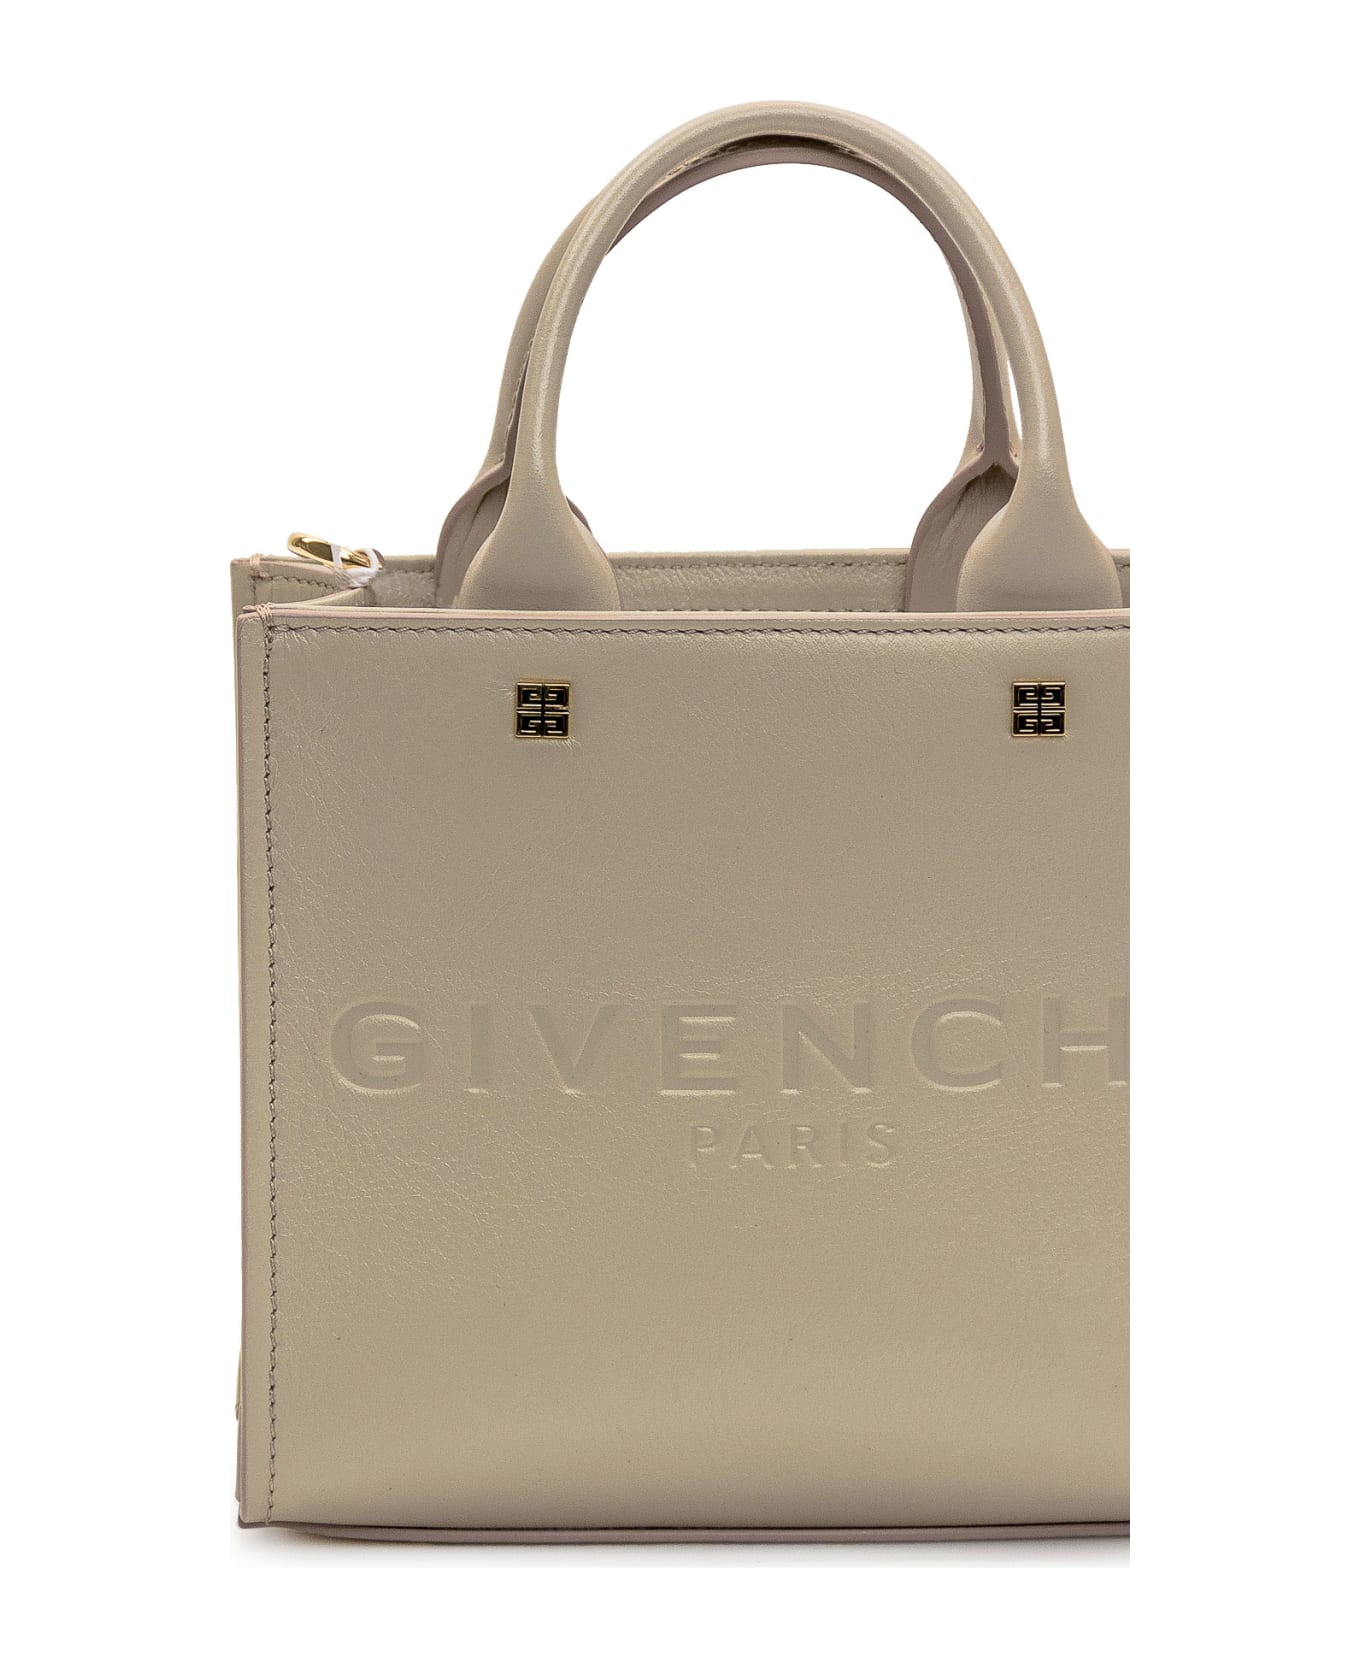 Givenchy G Tote Bag - NATURAL BEIGE トートバッグ